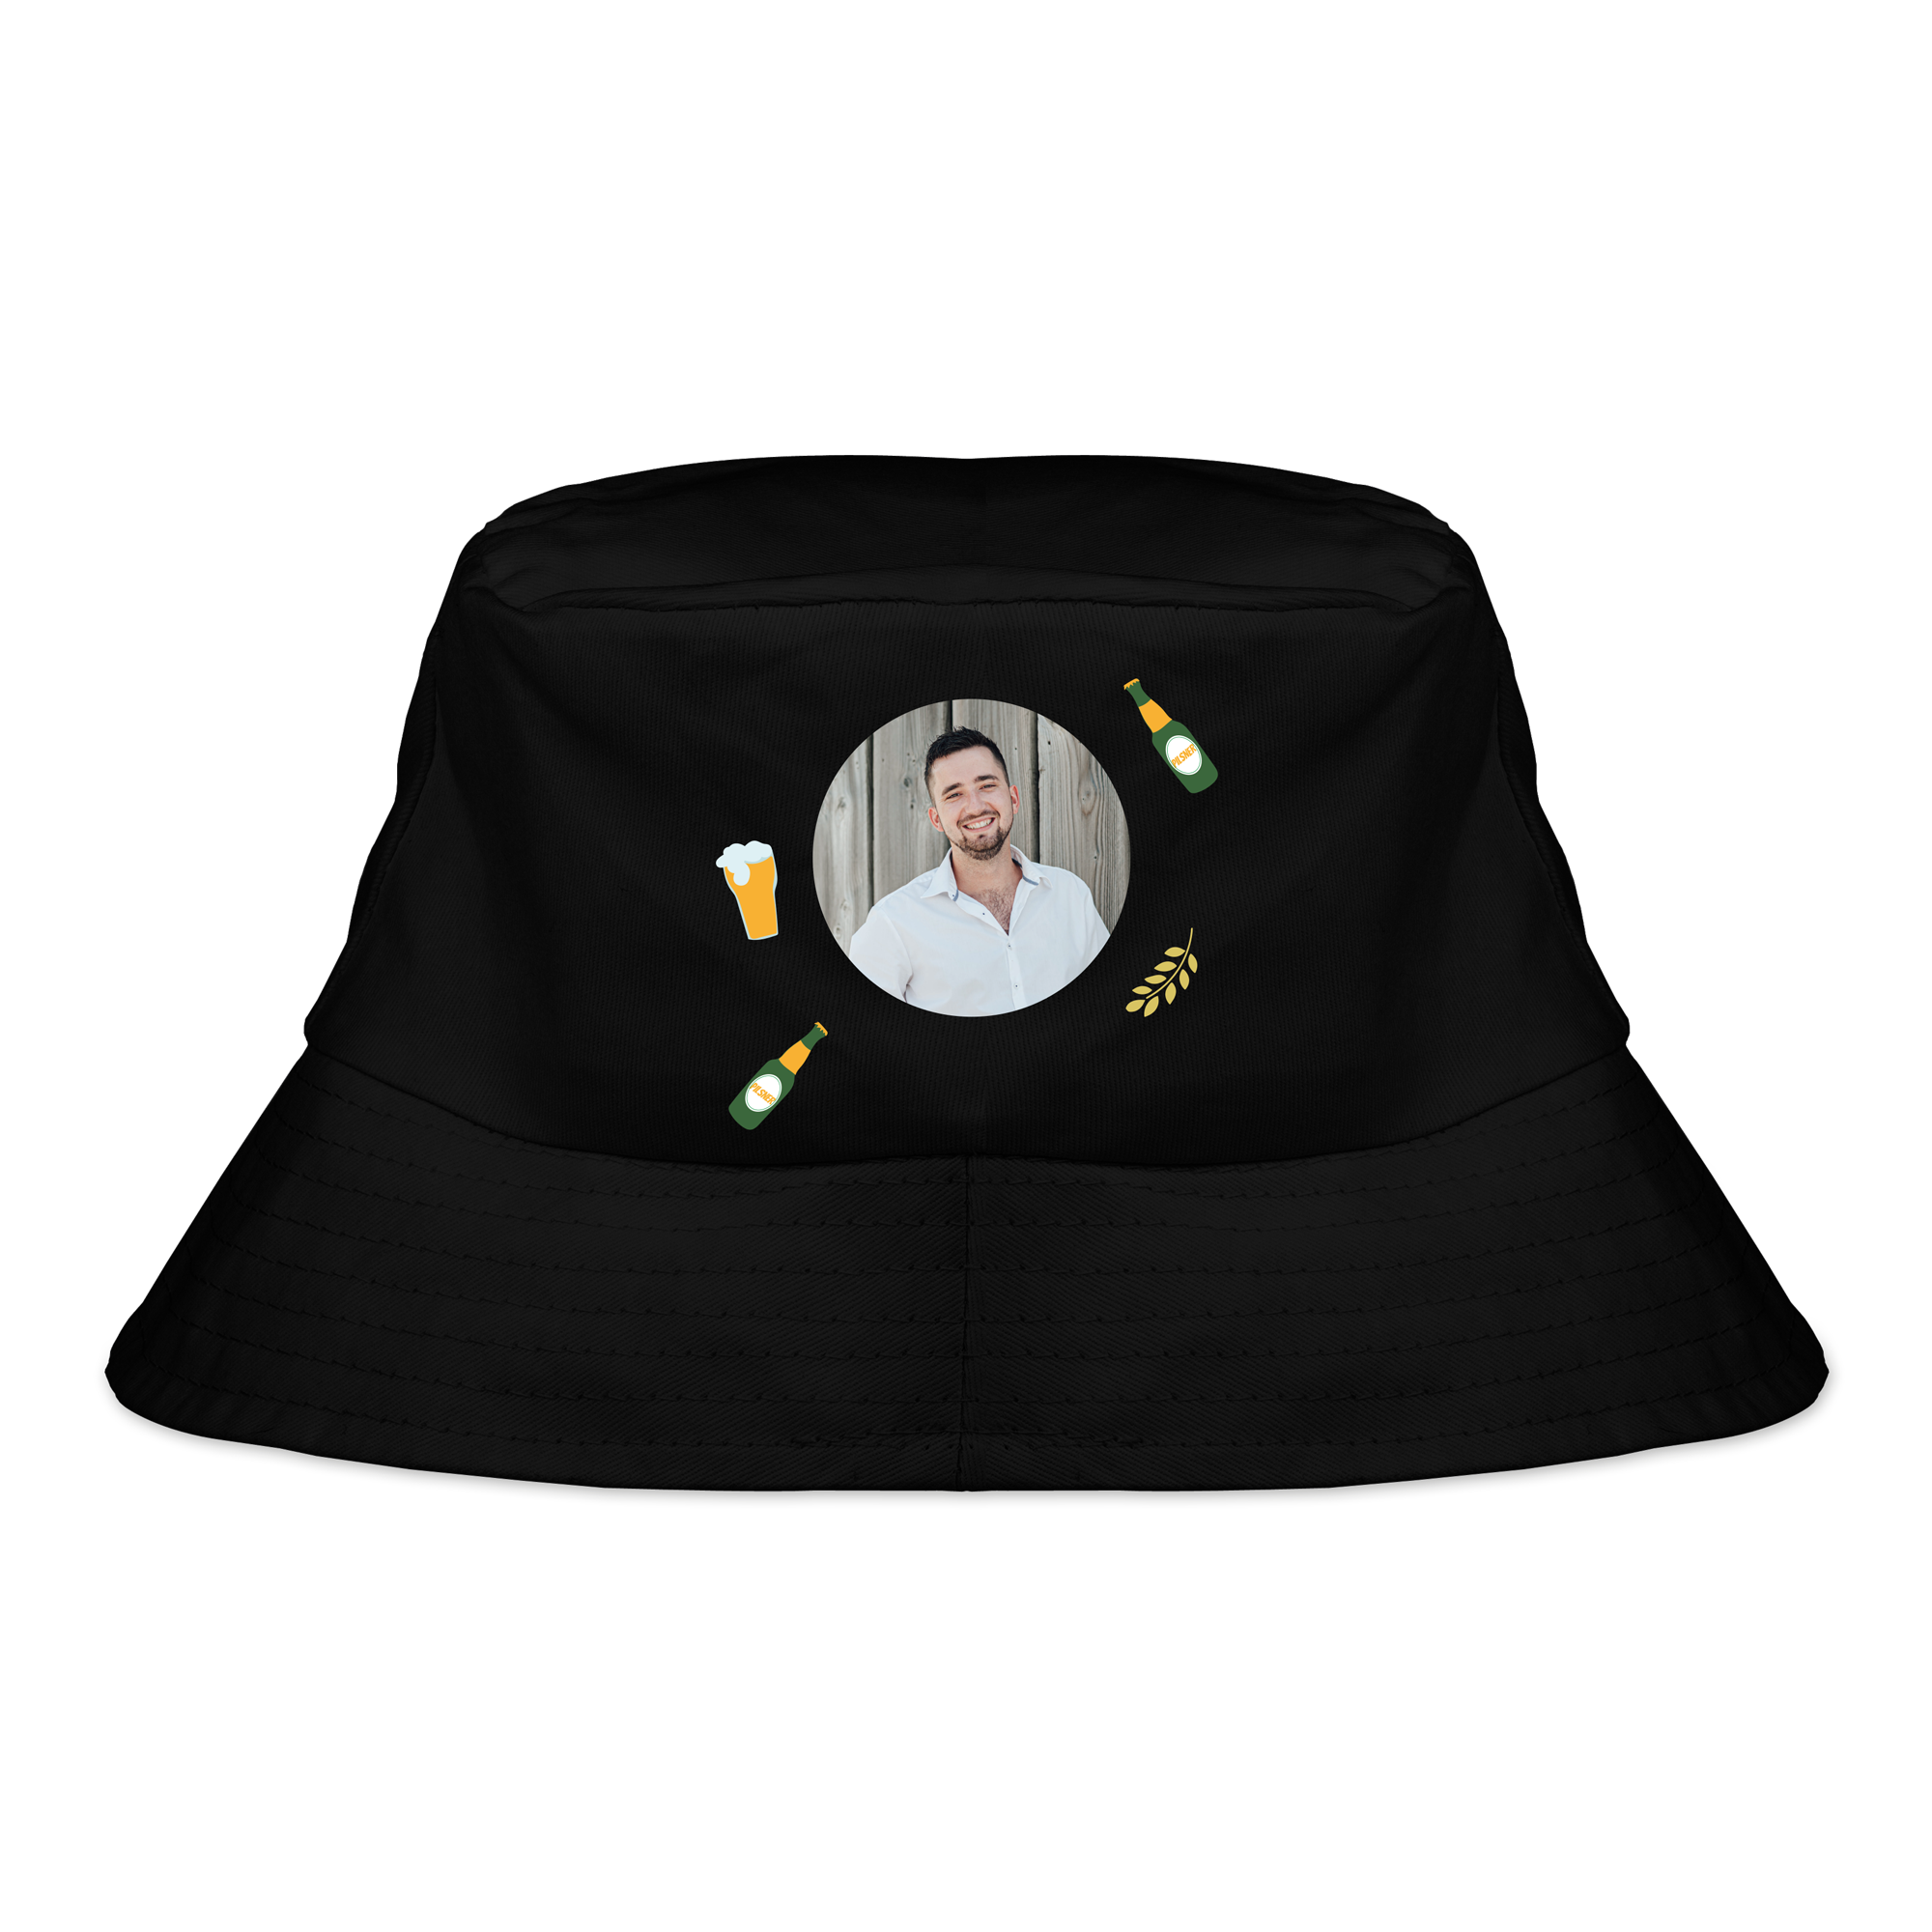 Bucket hat - Black